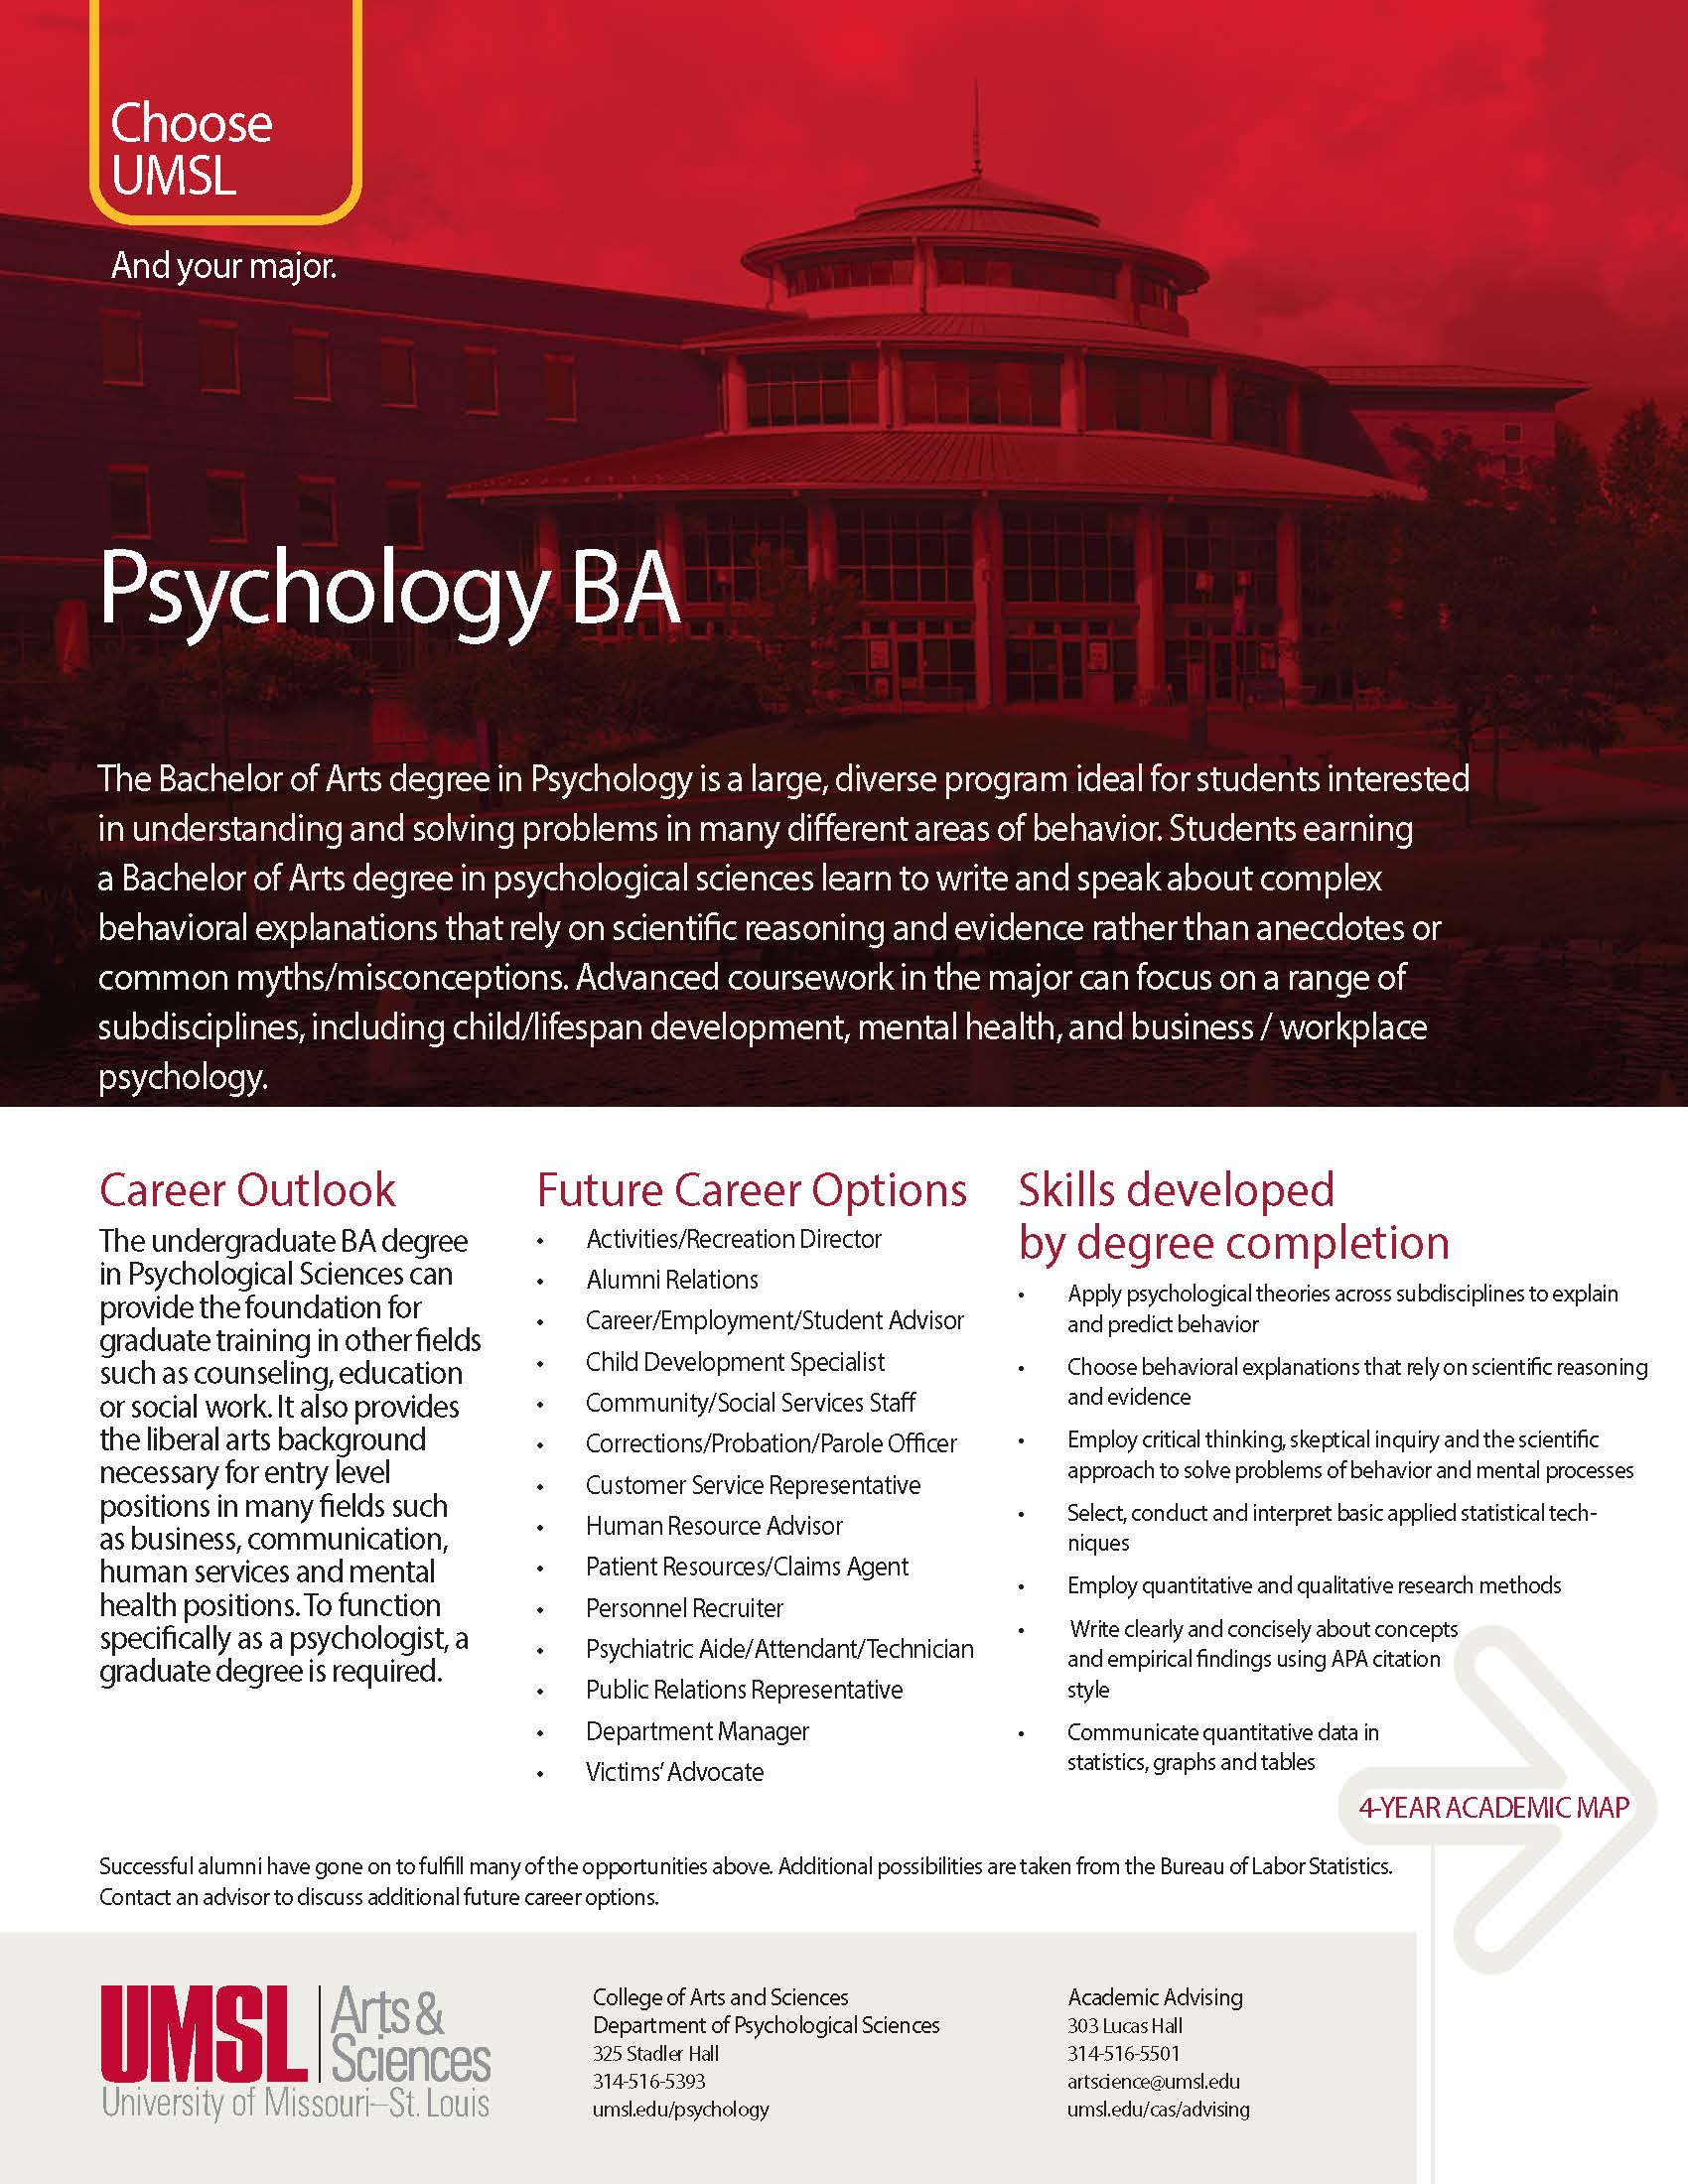 Psychology BA Overview